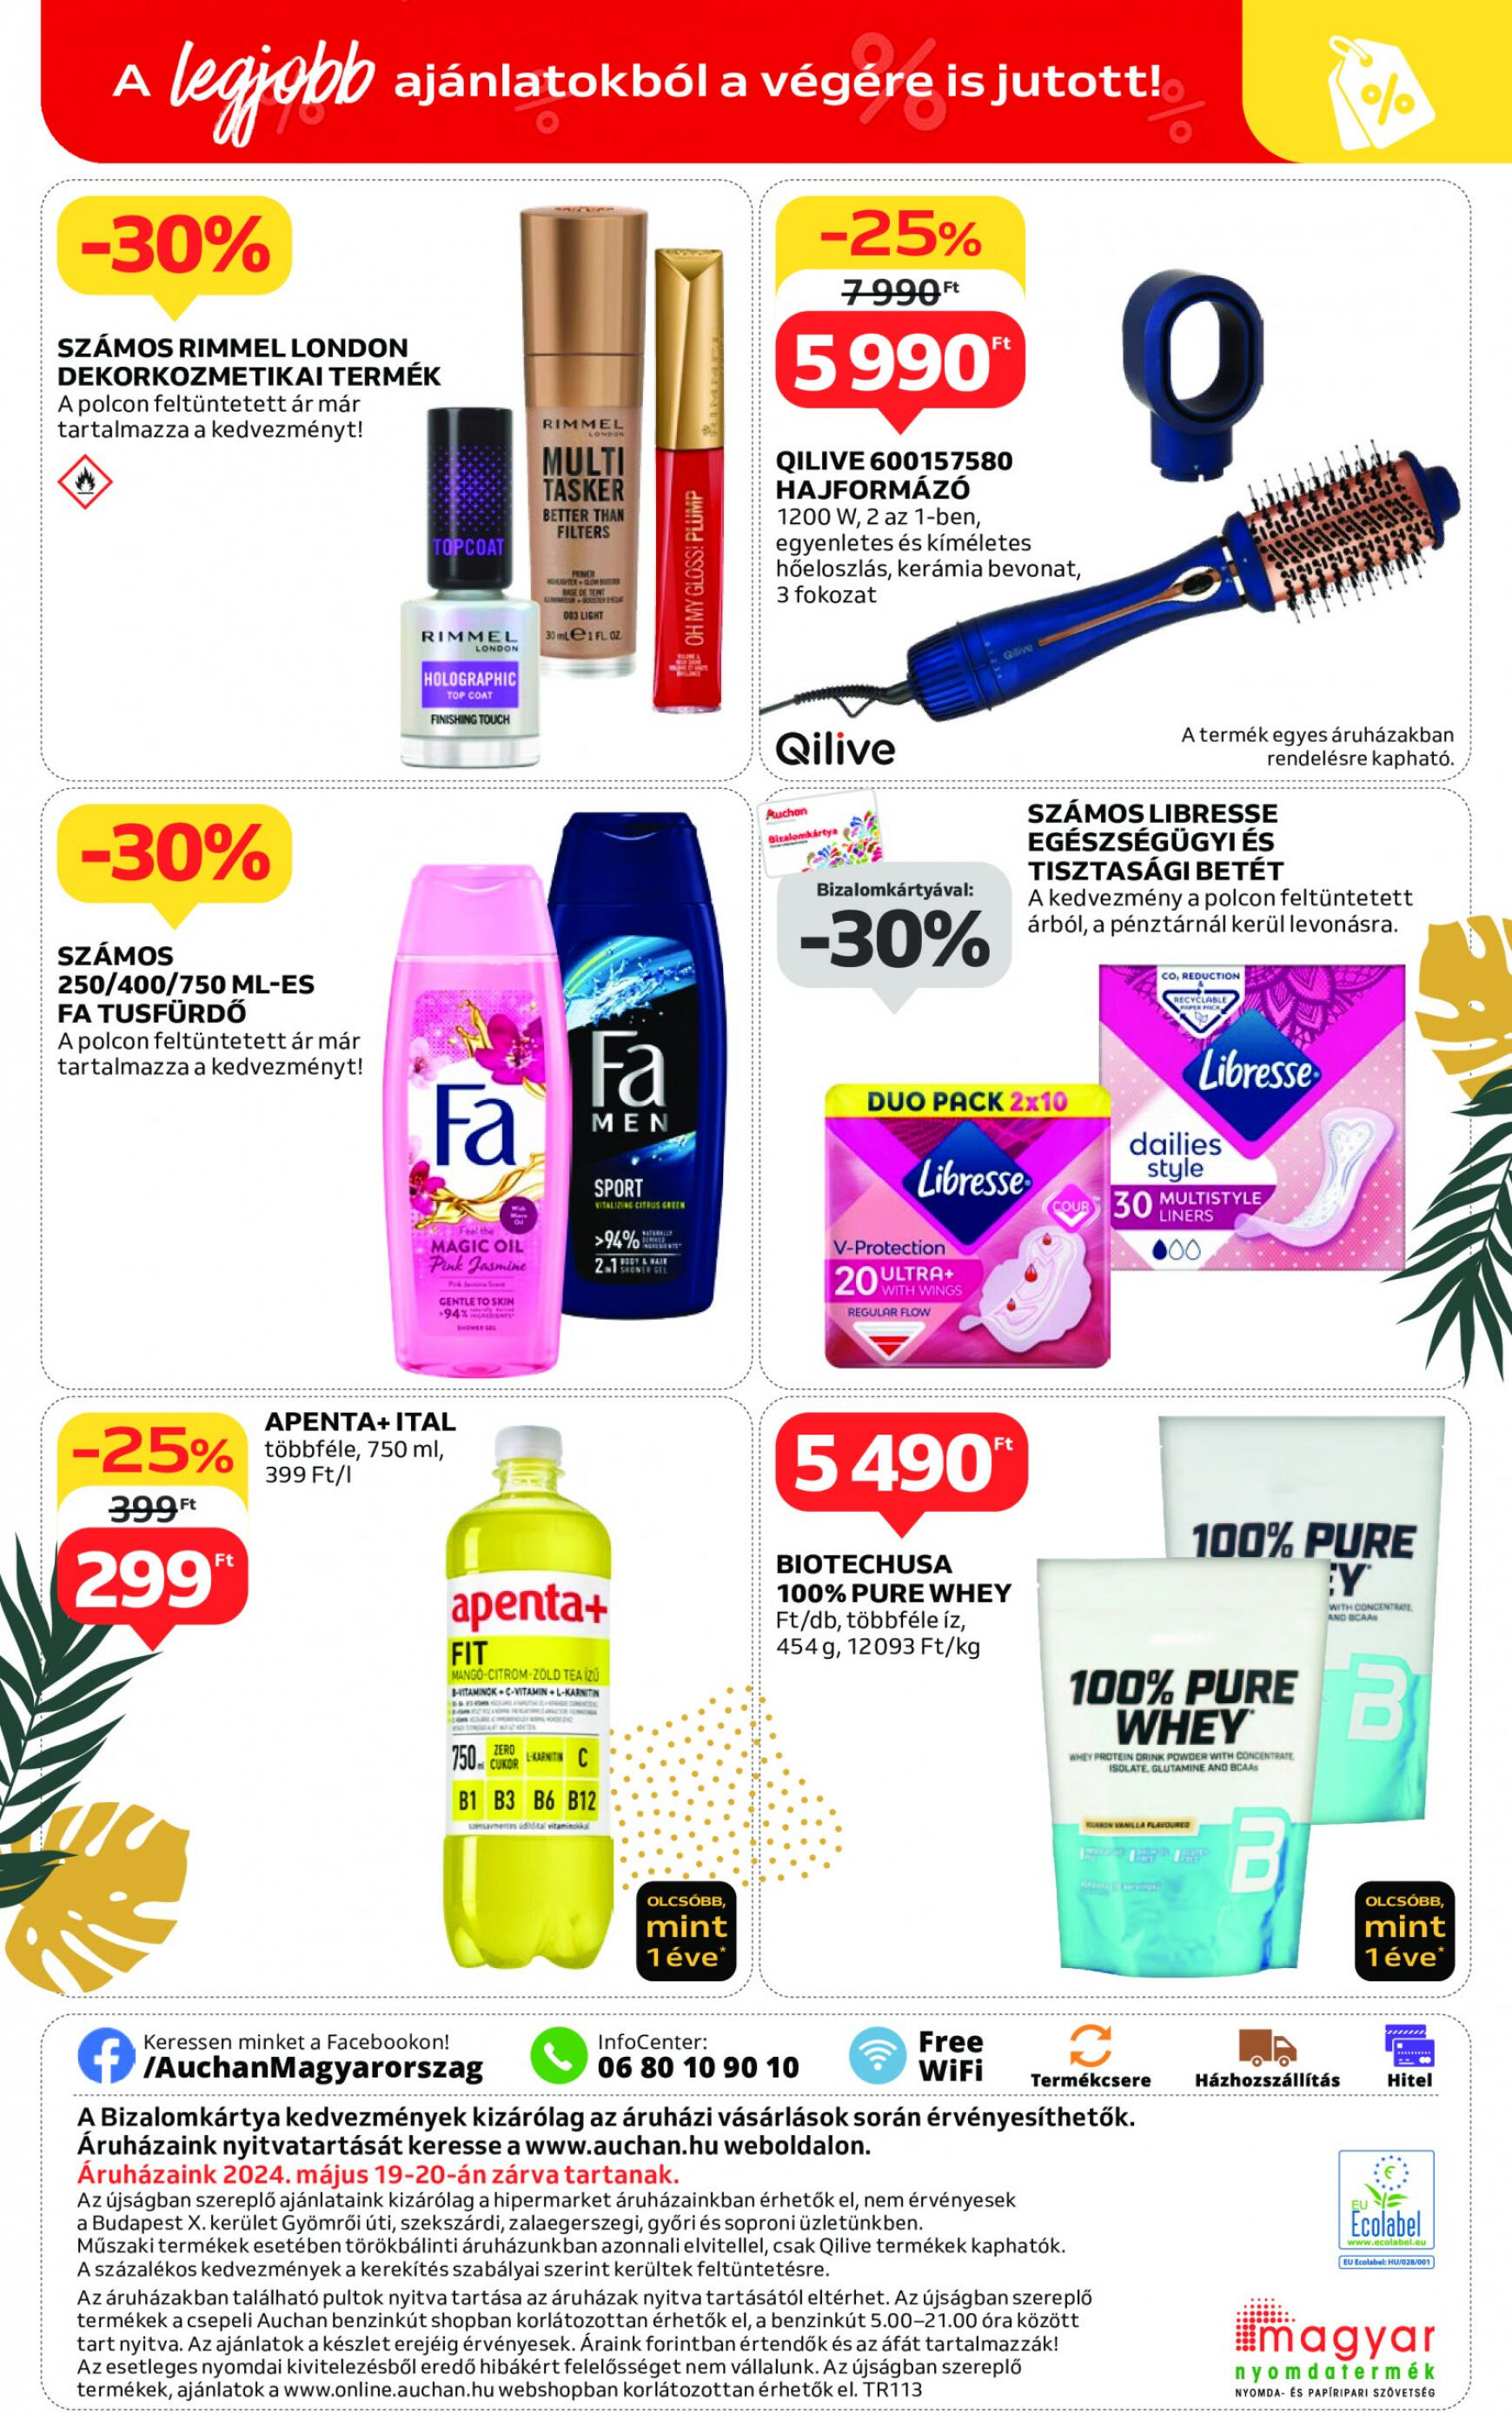 auchan - Aktuális újság Auchan 05.09. - 05.22. - page: 16